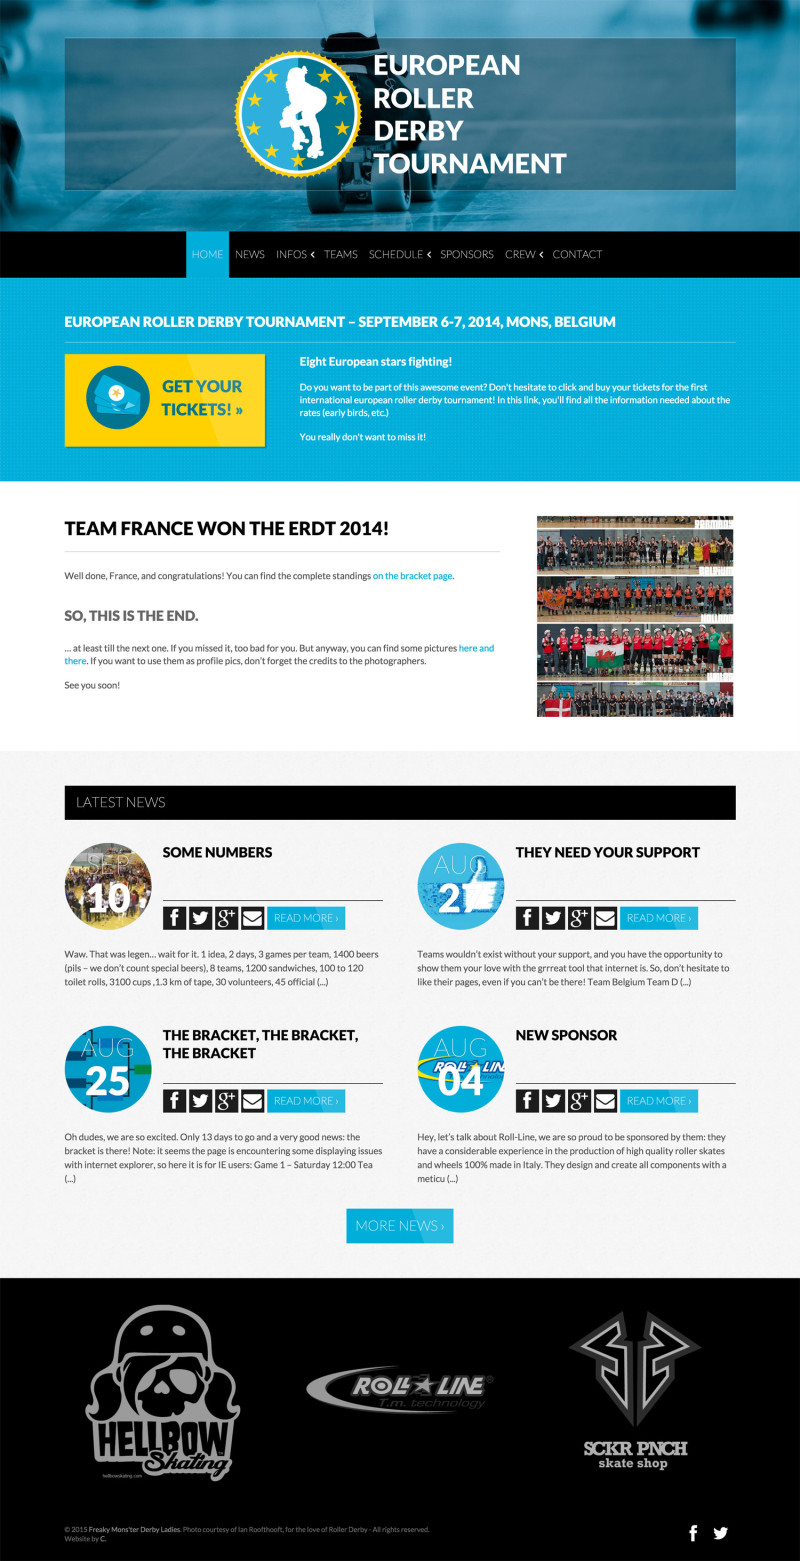 European roller derby tournament website - desktop